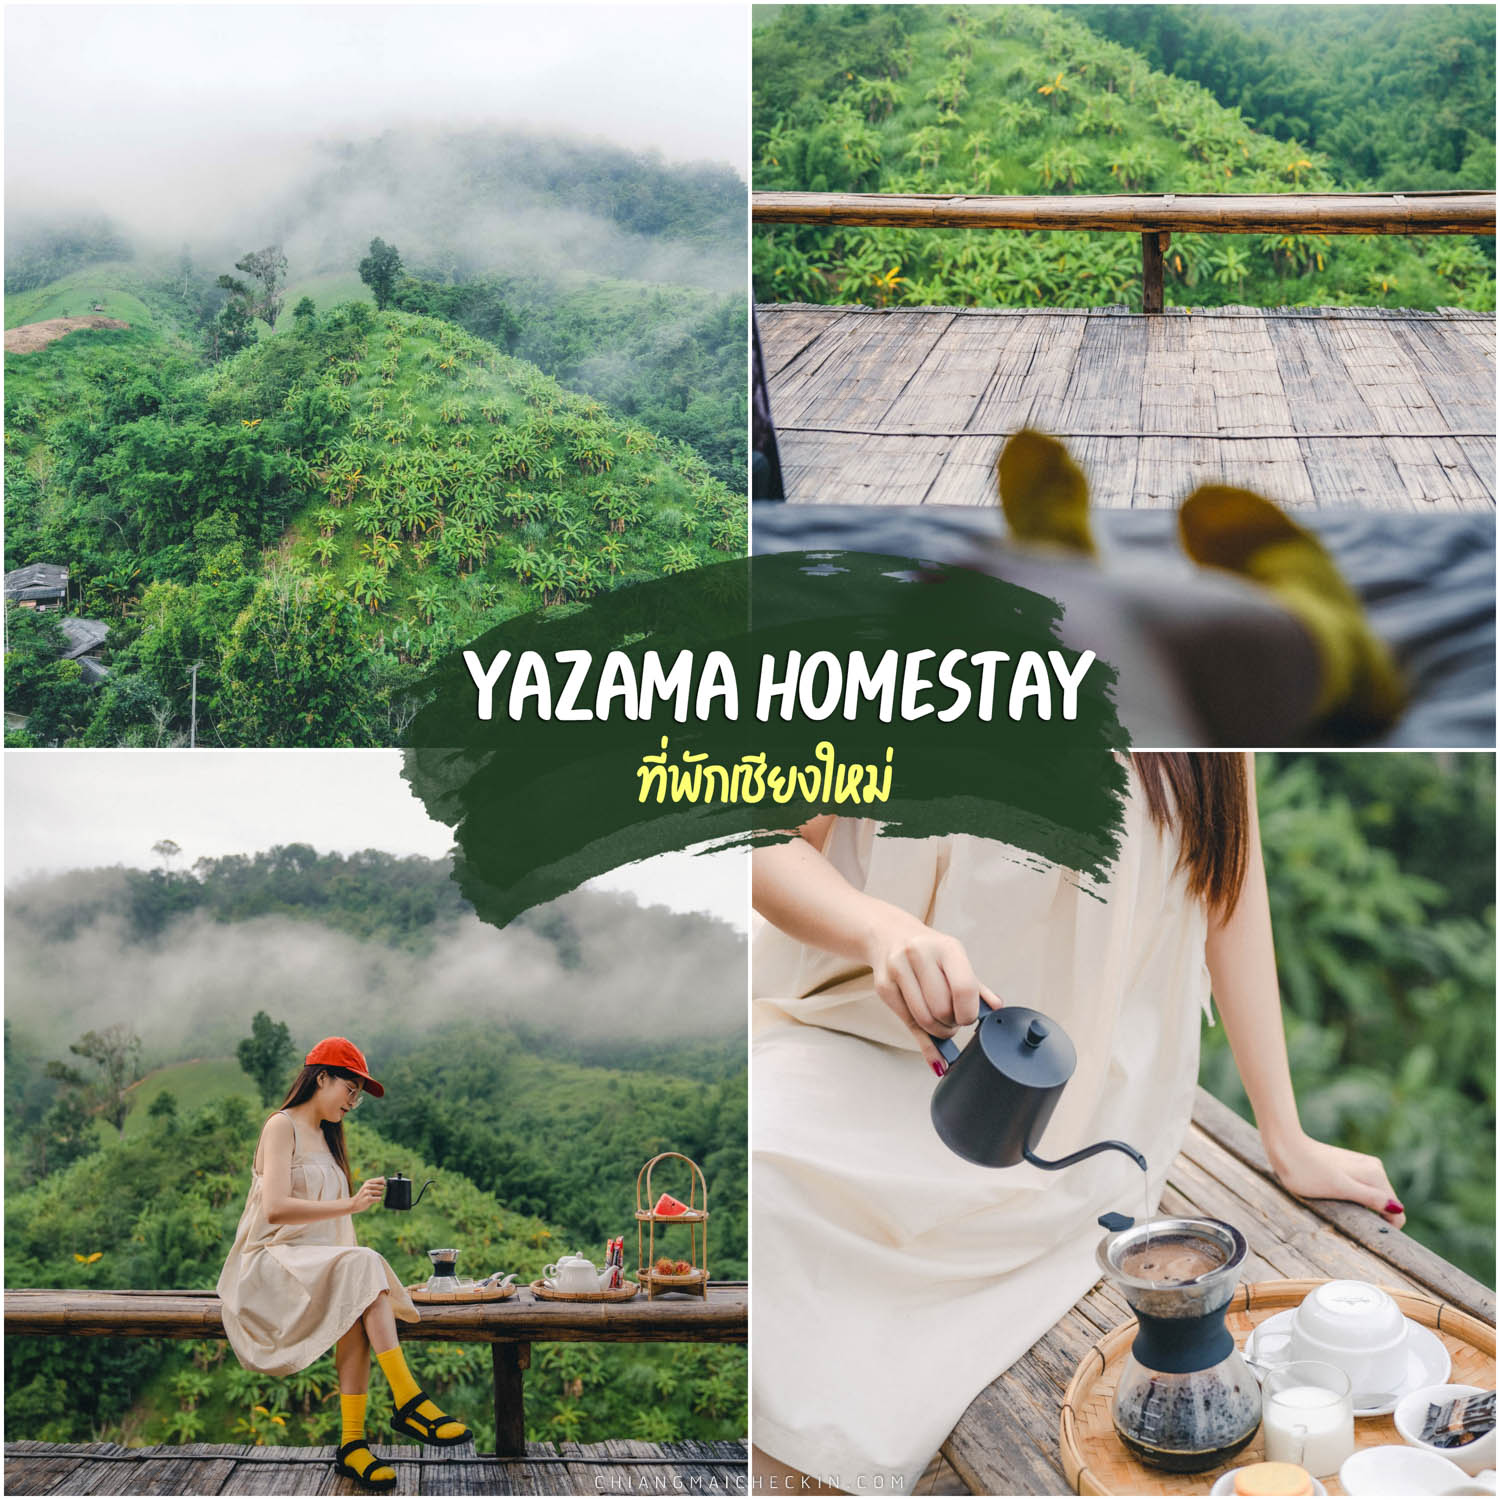 Yazama HomeStay Chiangmai ที่พักเชียงใหม่ บ้านไม้ไผ่สไตล์ชิวๆ วิวหลักล้านที่ไม่เหมือนใคร จิบชาได้ฟิวมากก